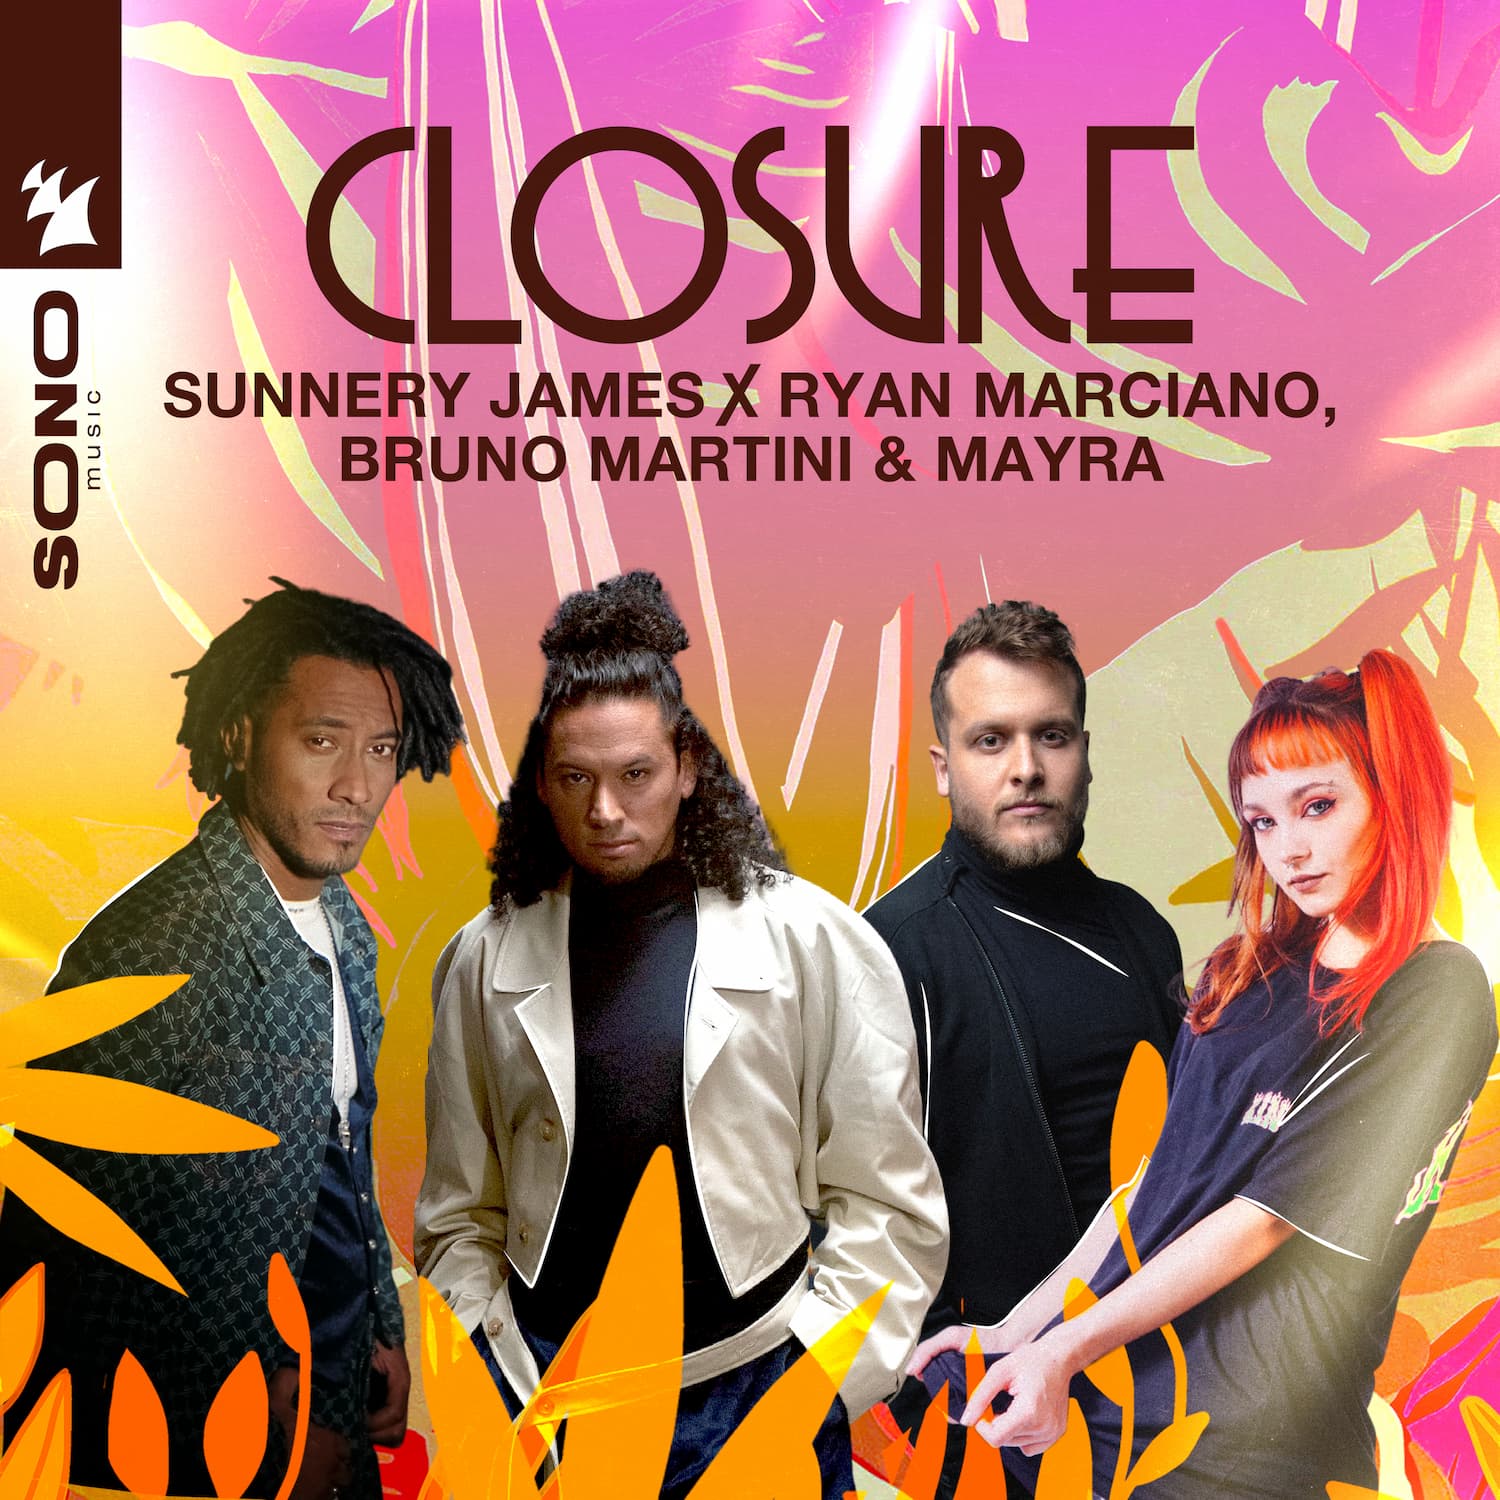 Bruno Martini e Sunnery James & Ryan Marciano lançam "Closure"